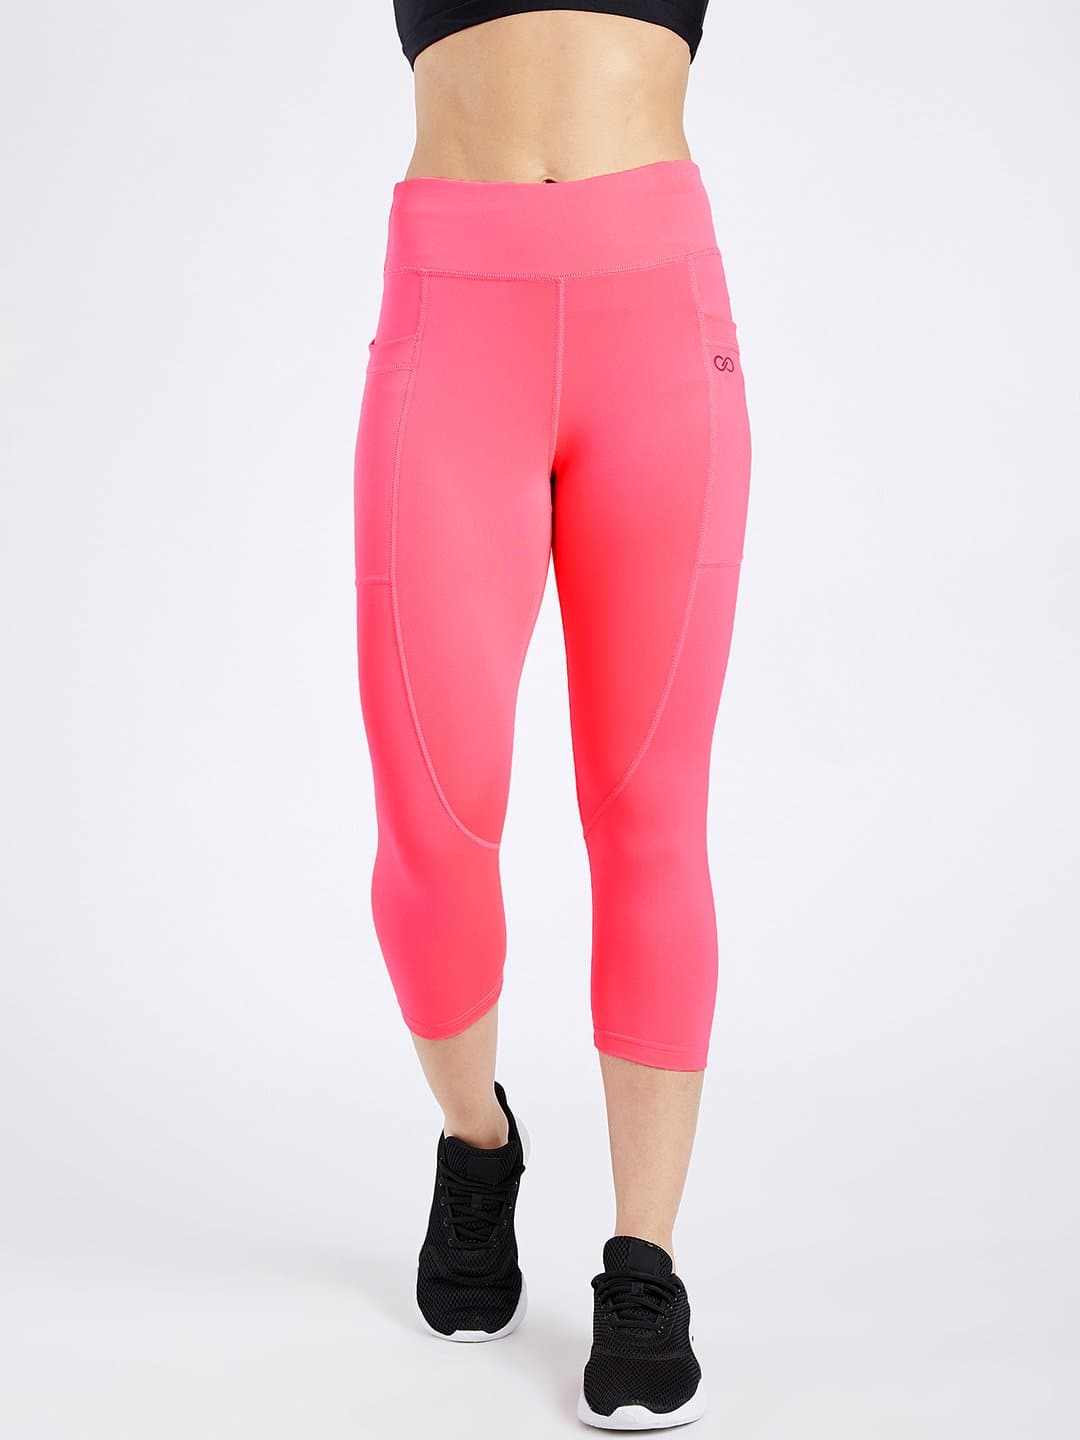 Lululemon Womens Mid Rise Knit Capri Leggings Hot Pink Size 6